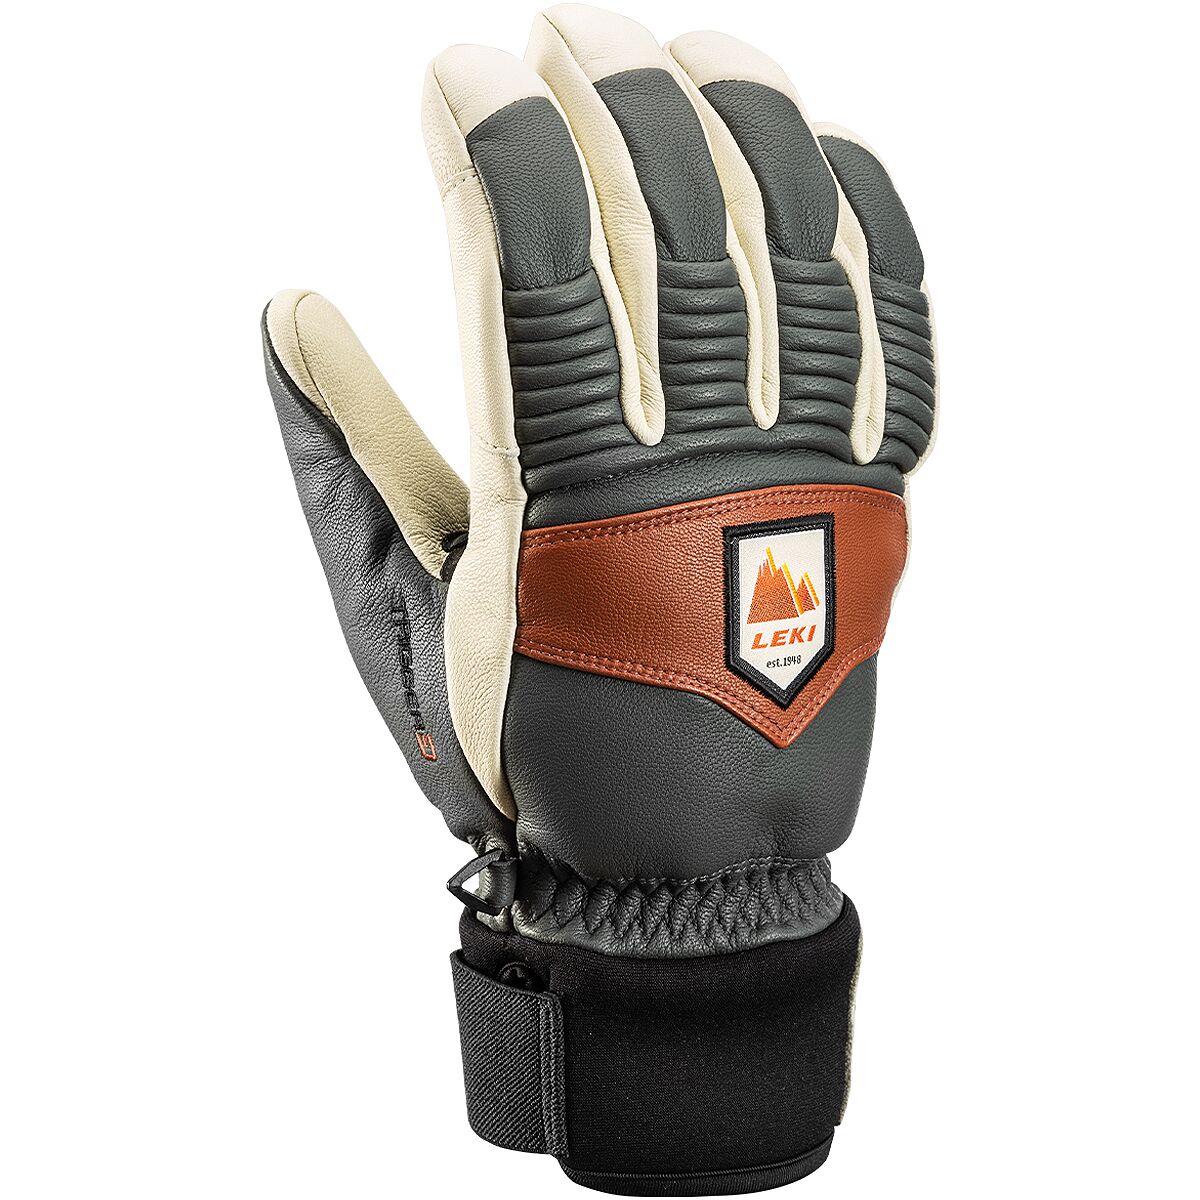 LEKI Patrol 3D Glove - Men's